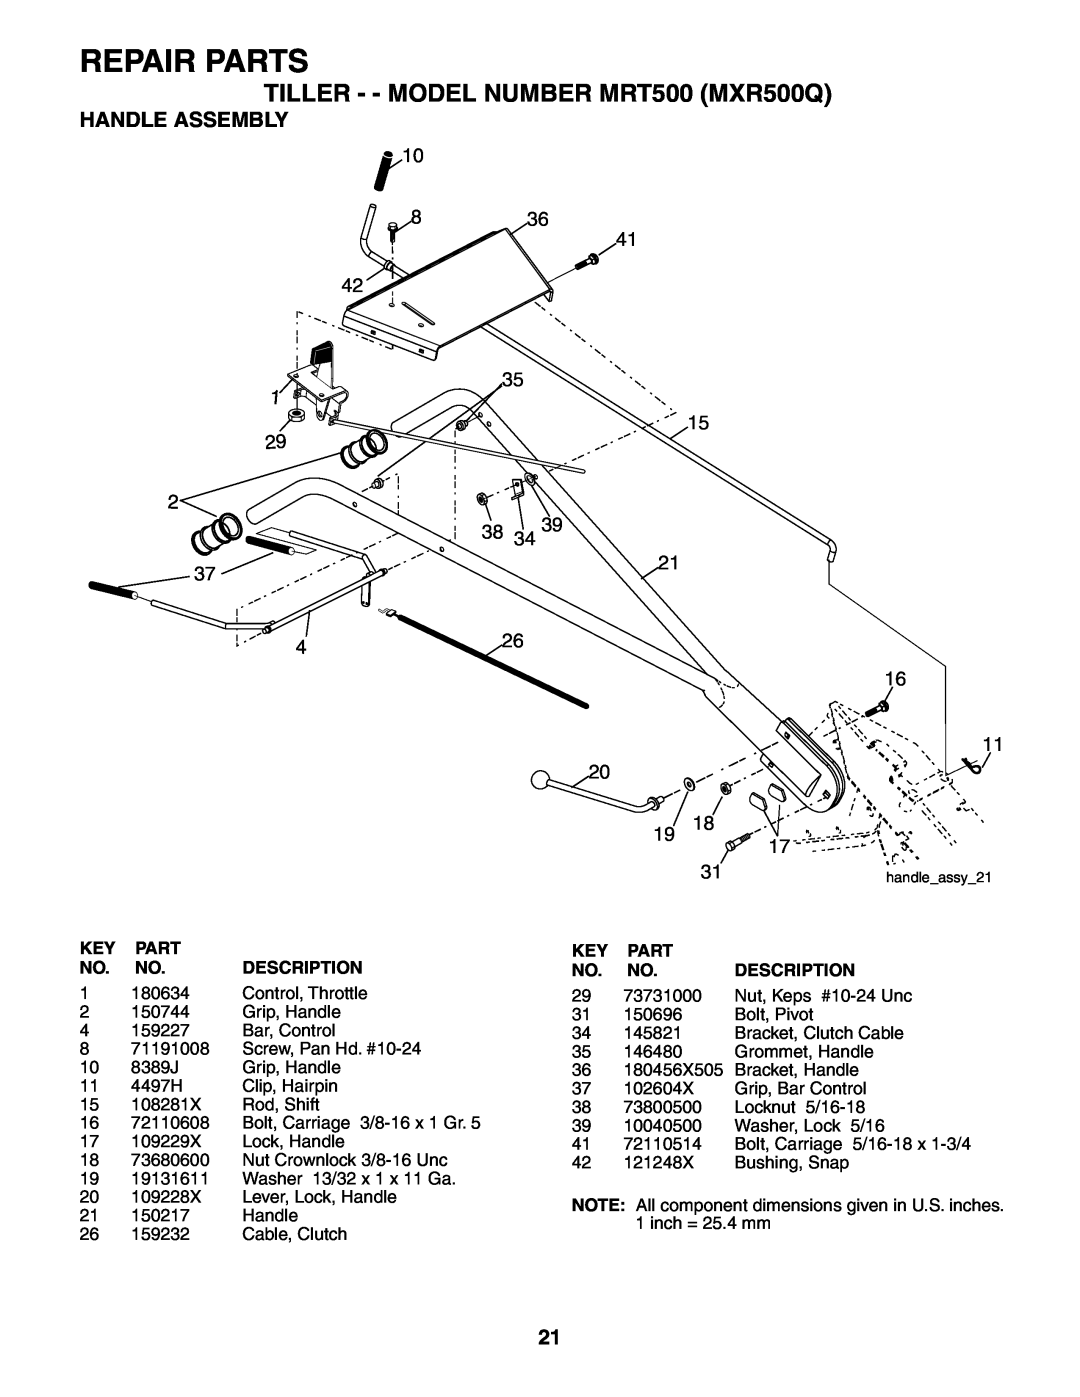 Poulan owner manual Repair Parts, TILLER - - MODEL NUMBER MRT500 MXR500Q, Handle Assembly, 38 34, Description 